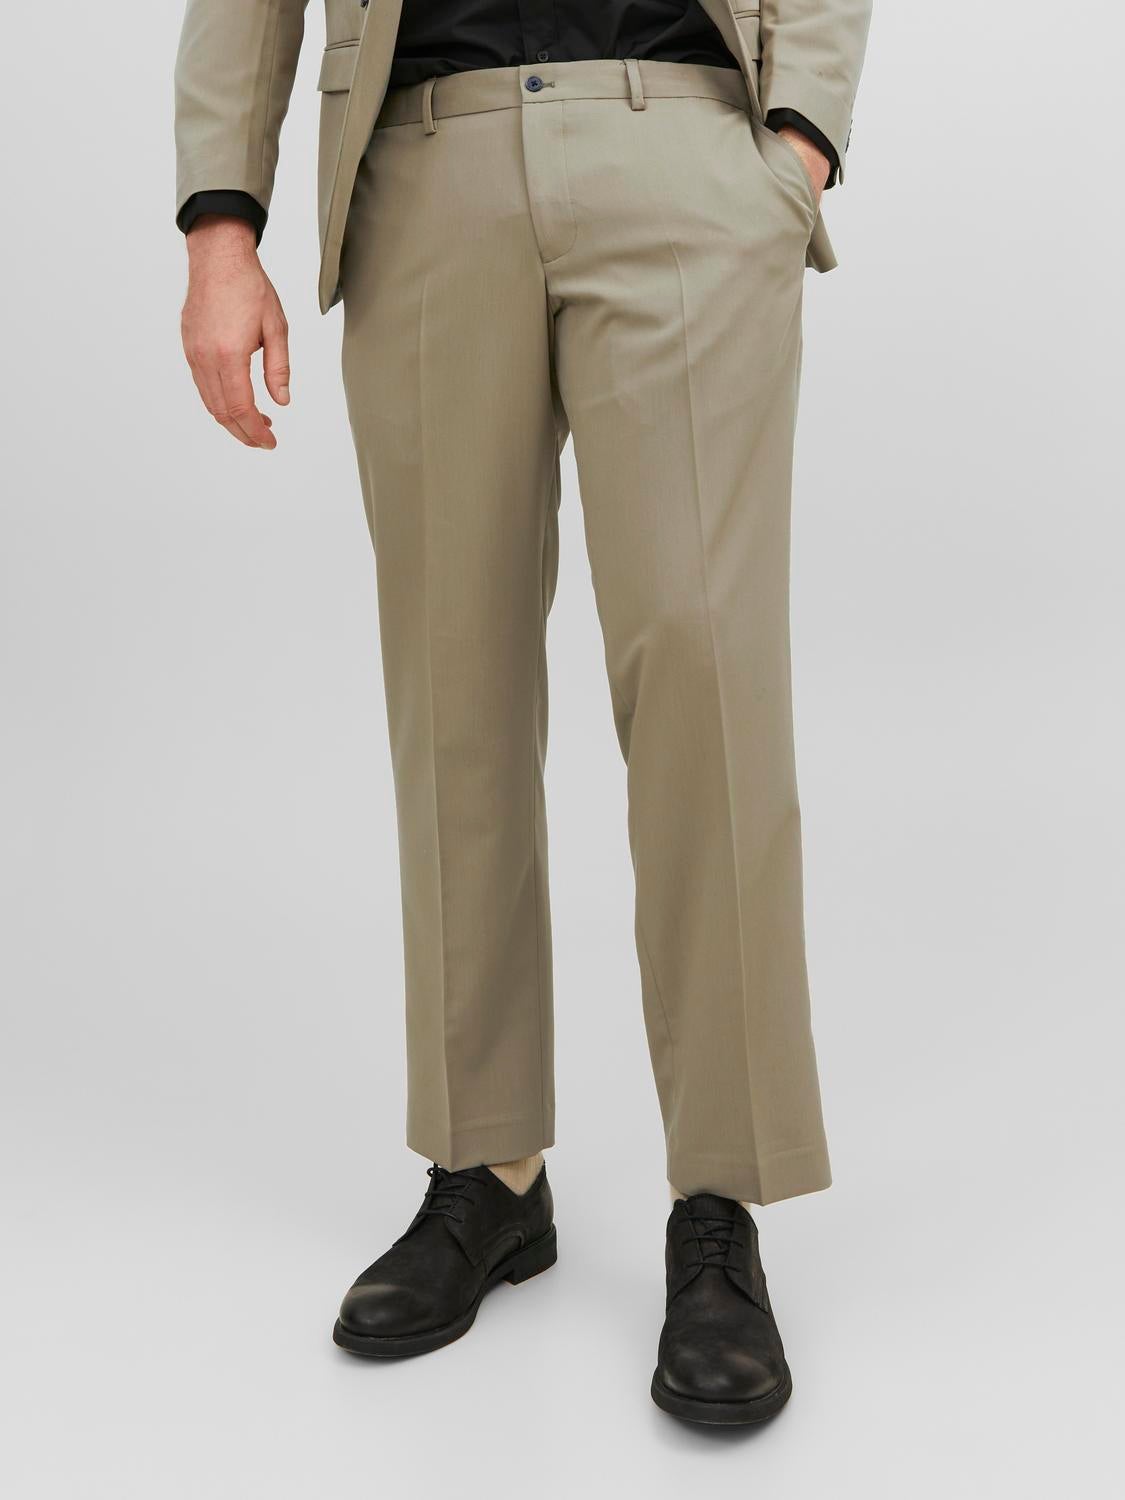 MRULIC jeans for men Trousers Causal Waist Pockets Plus-Size Joggers Pants  Fit Cargo Soft Elastic Men's Slim Stylish Running Loose Men's pants Men  Cargo Pants Green + XL - Walmart.com